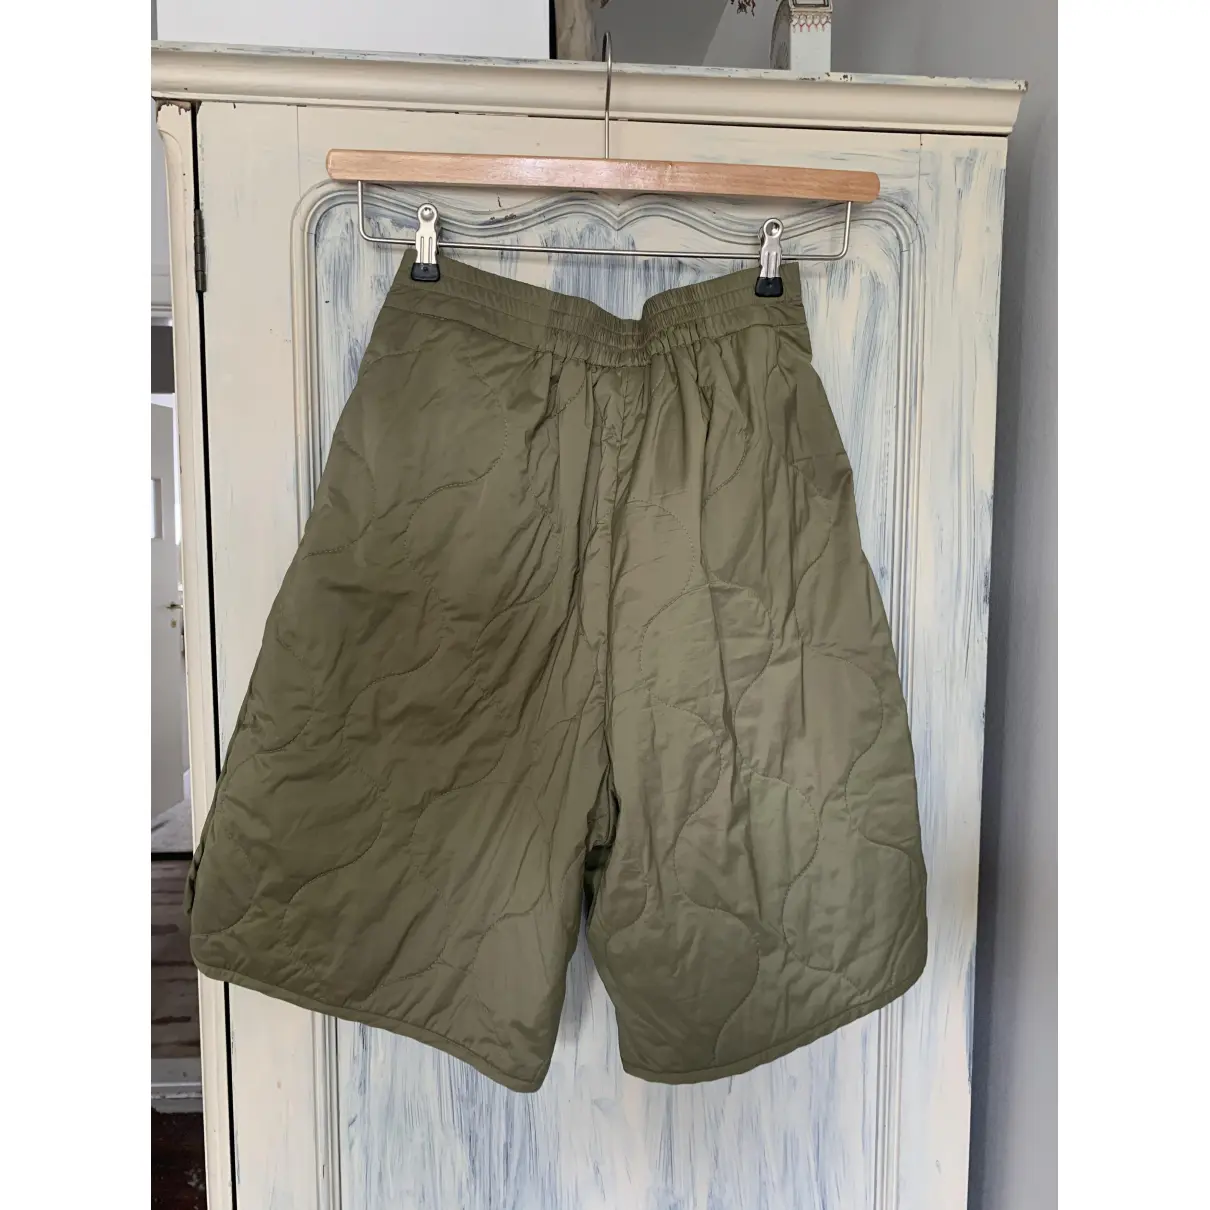 Buy Rabens Saloner Green Polyester Shorts online